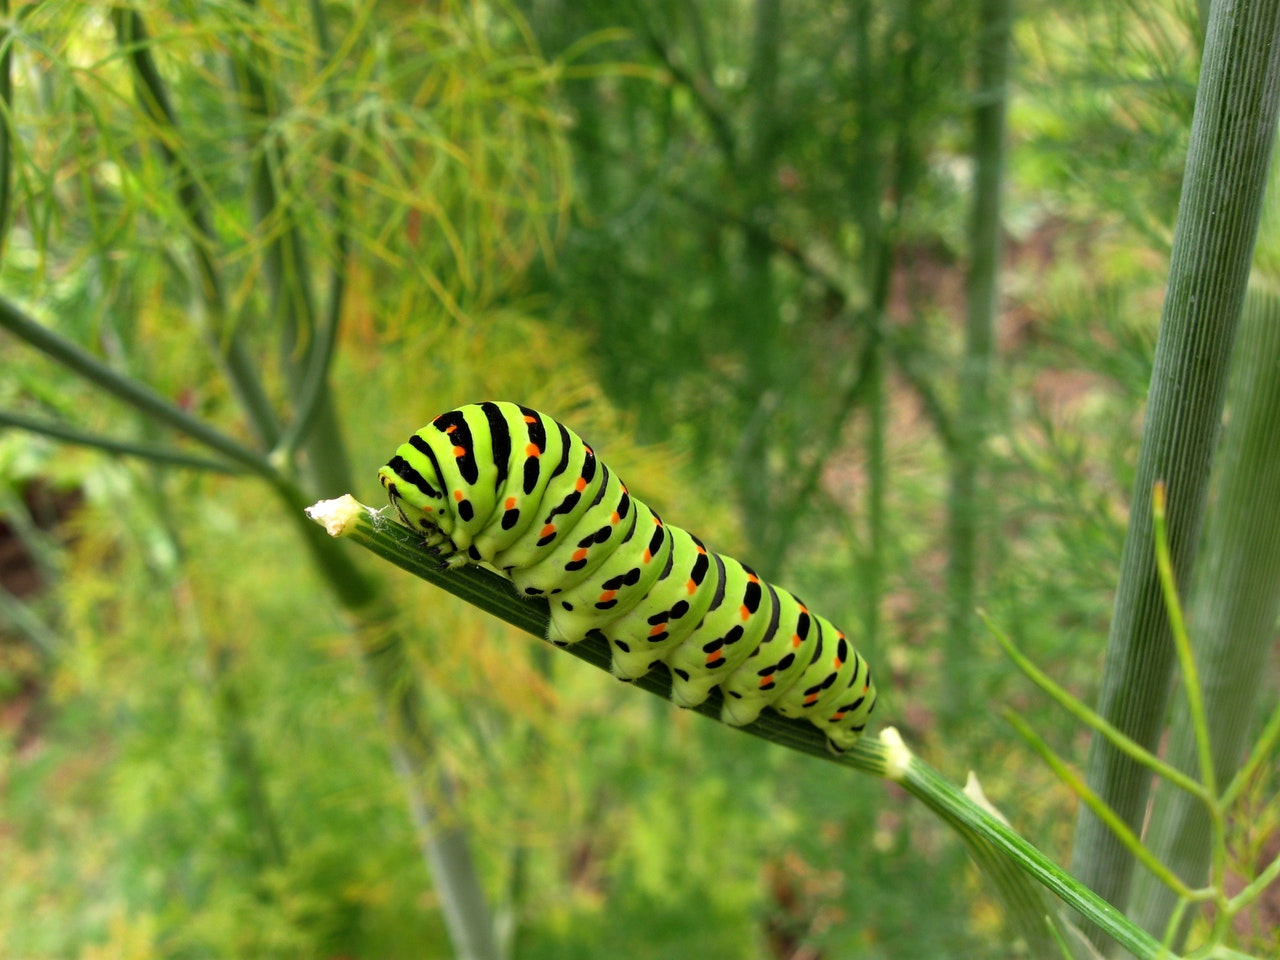 A Caterpillar to represent Diversification